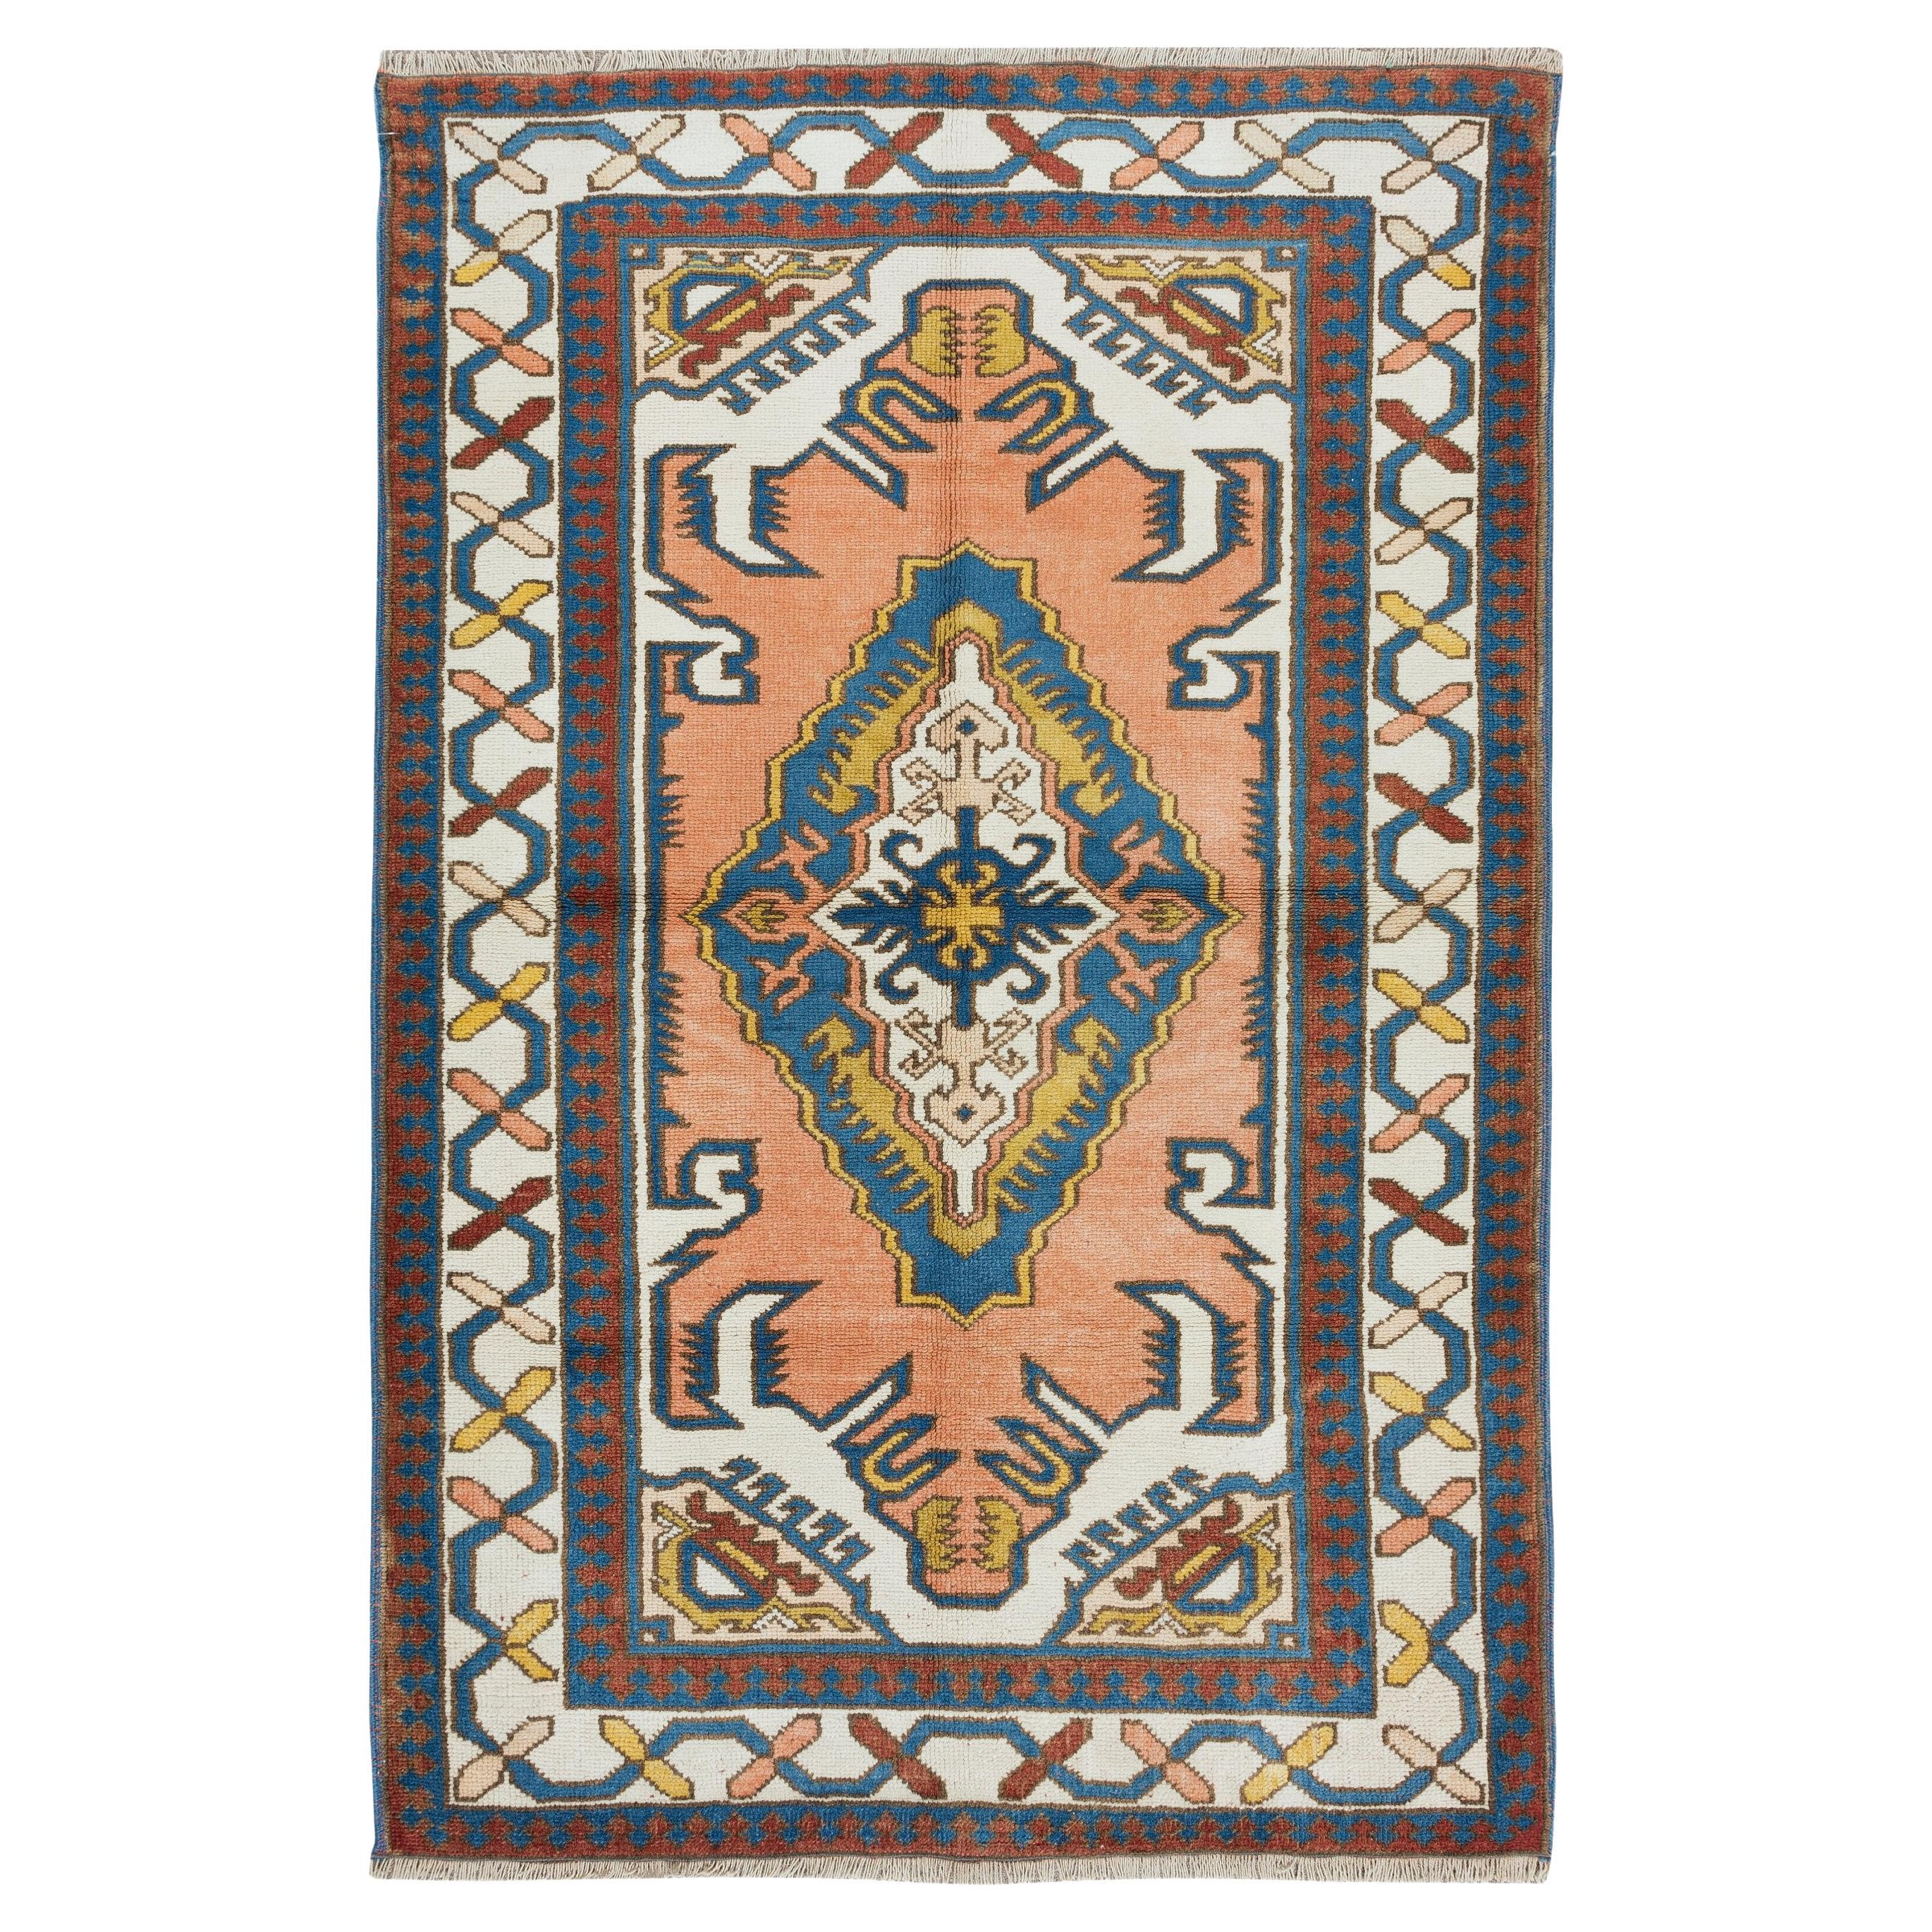 4x6 Ft Modern Handmade Geometric Design Turkish Rug, All Wool & Natural Dyes (tapis en laine et teintures naturelles)